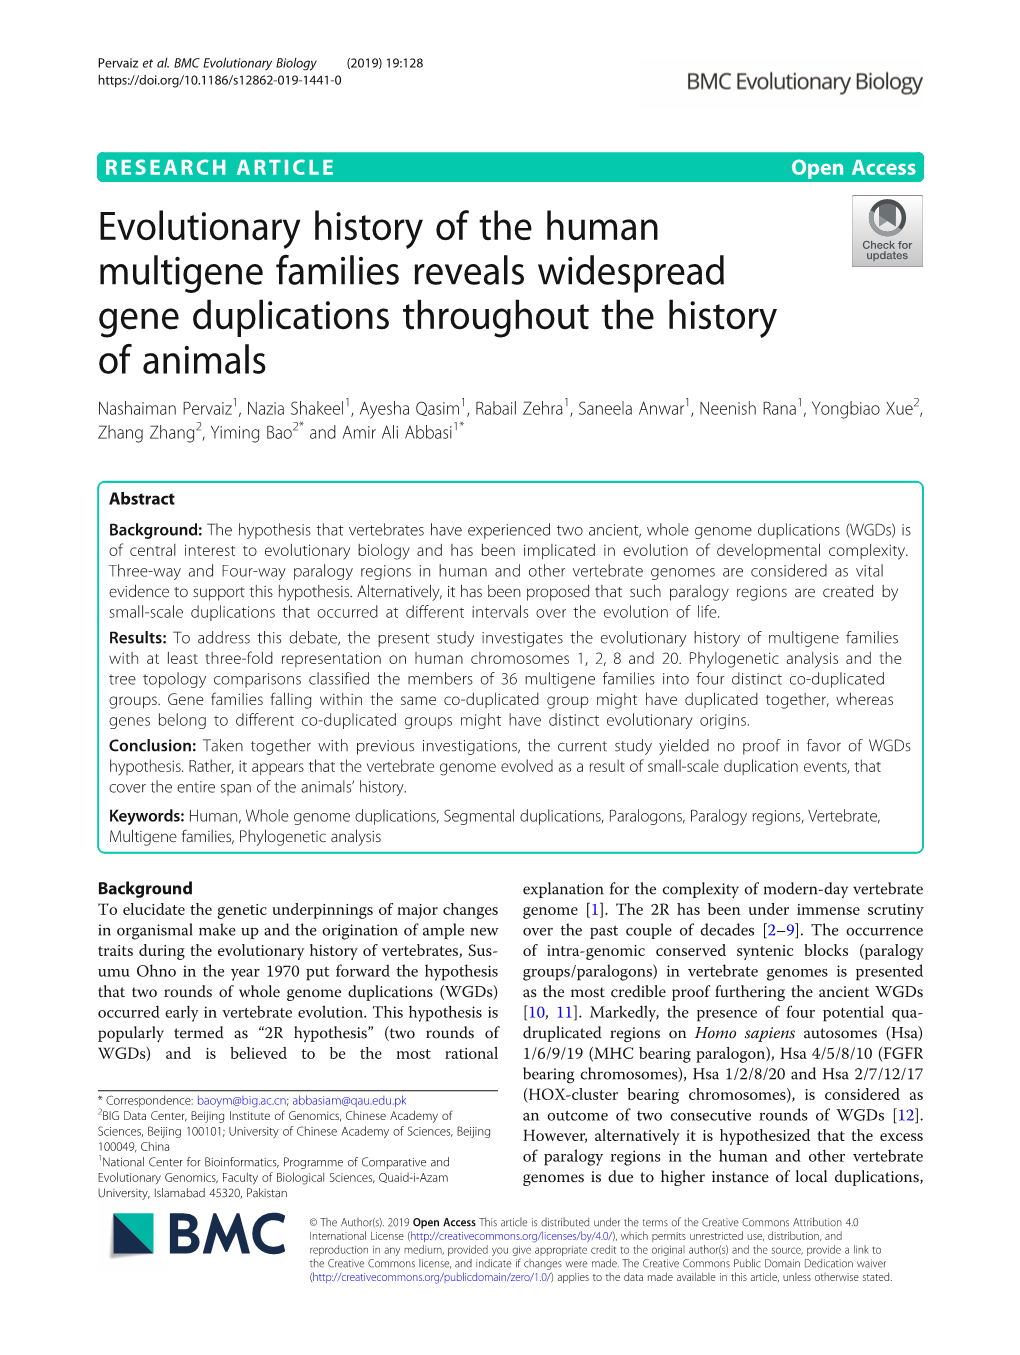 Evolutionary History of the Human Multigene Families Reveals